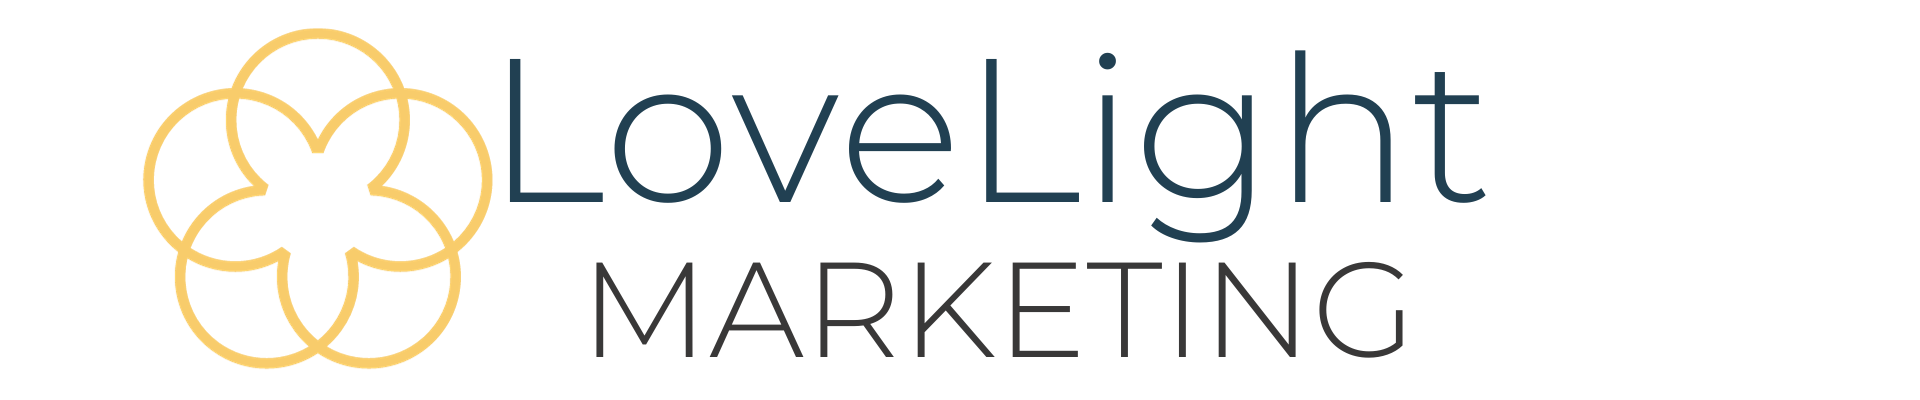 LoveLight Marketing logo